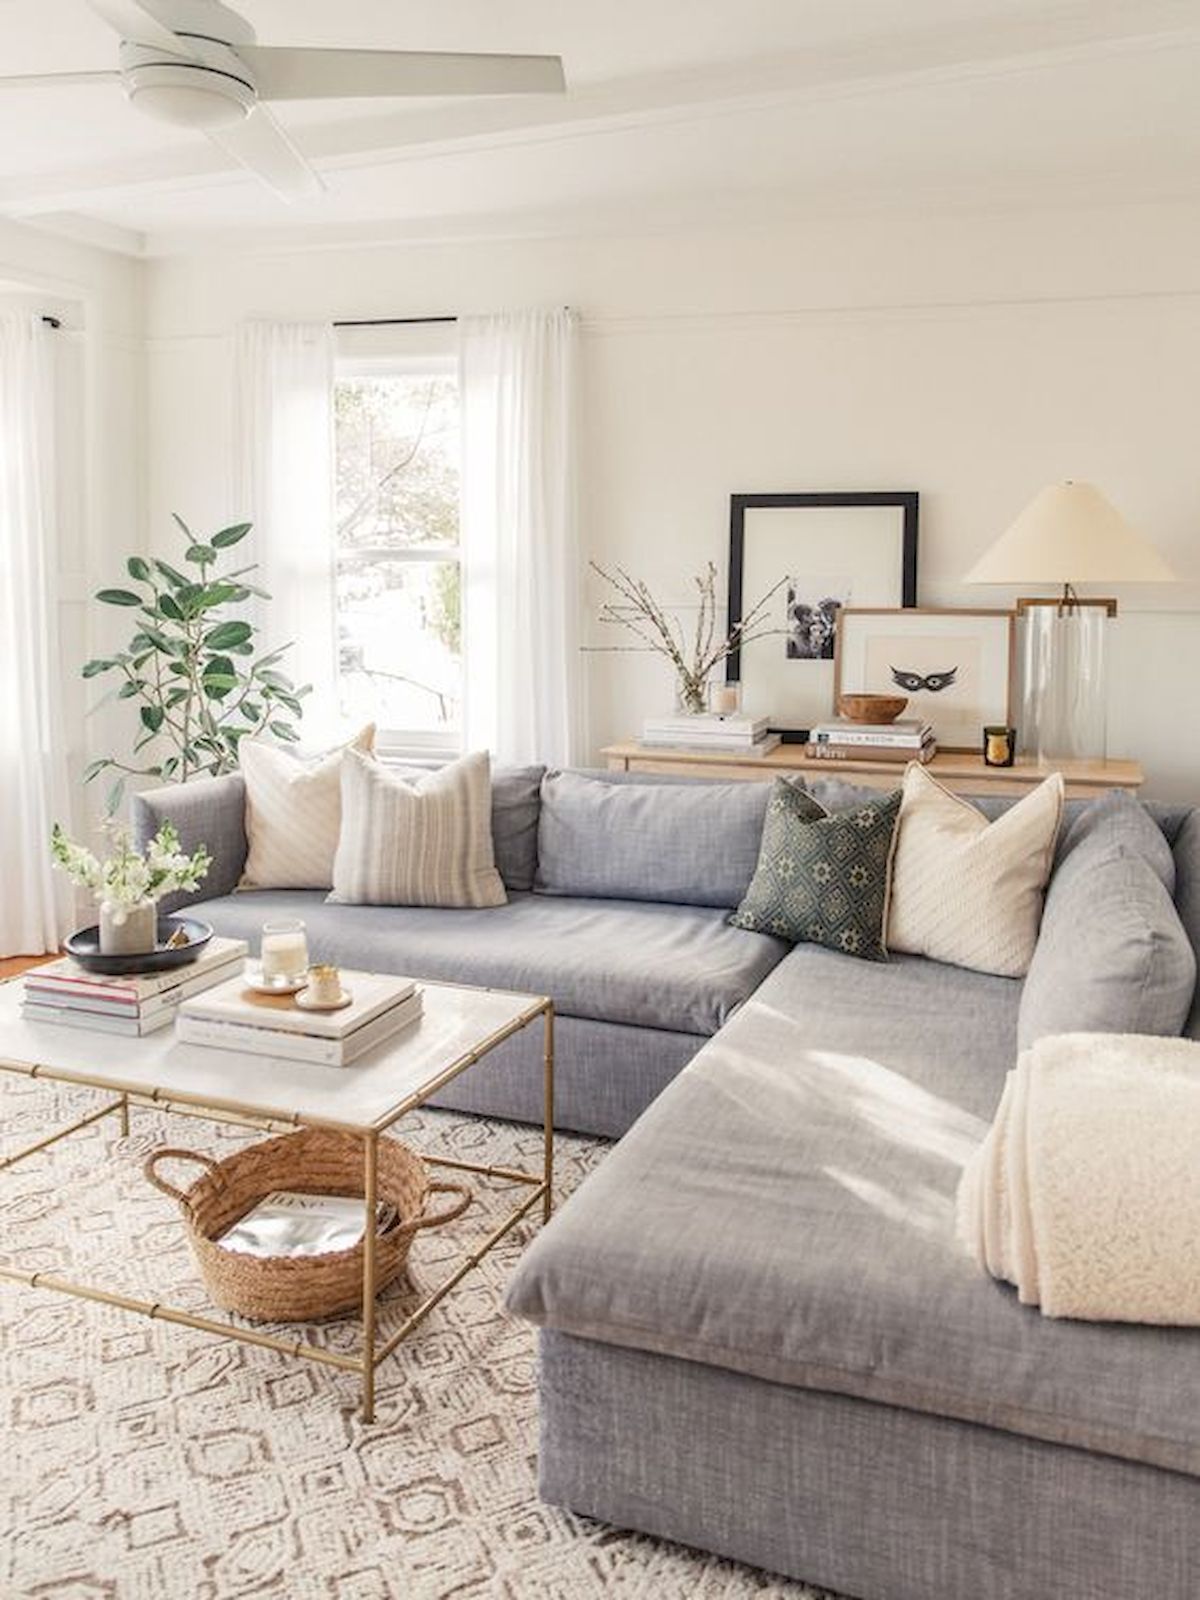 50 Gorgeous Living Room Decor And Design Ideas (32)